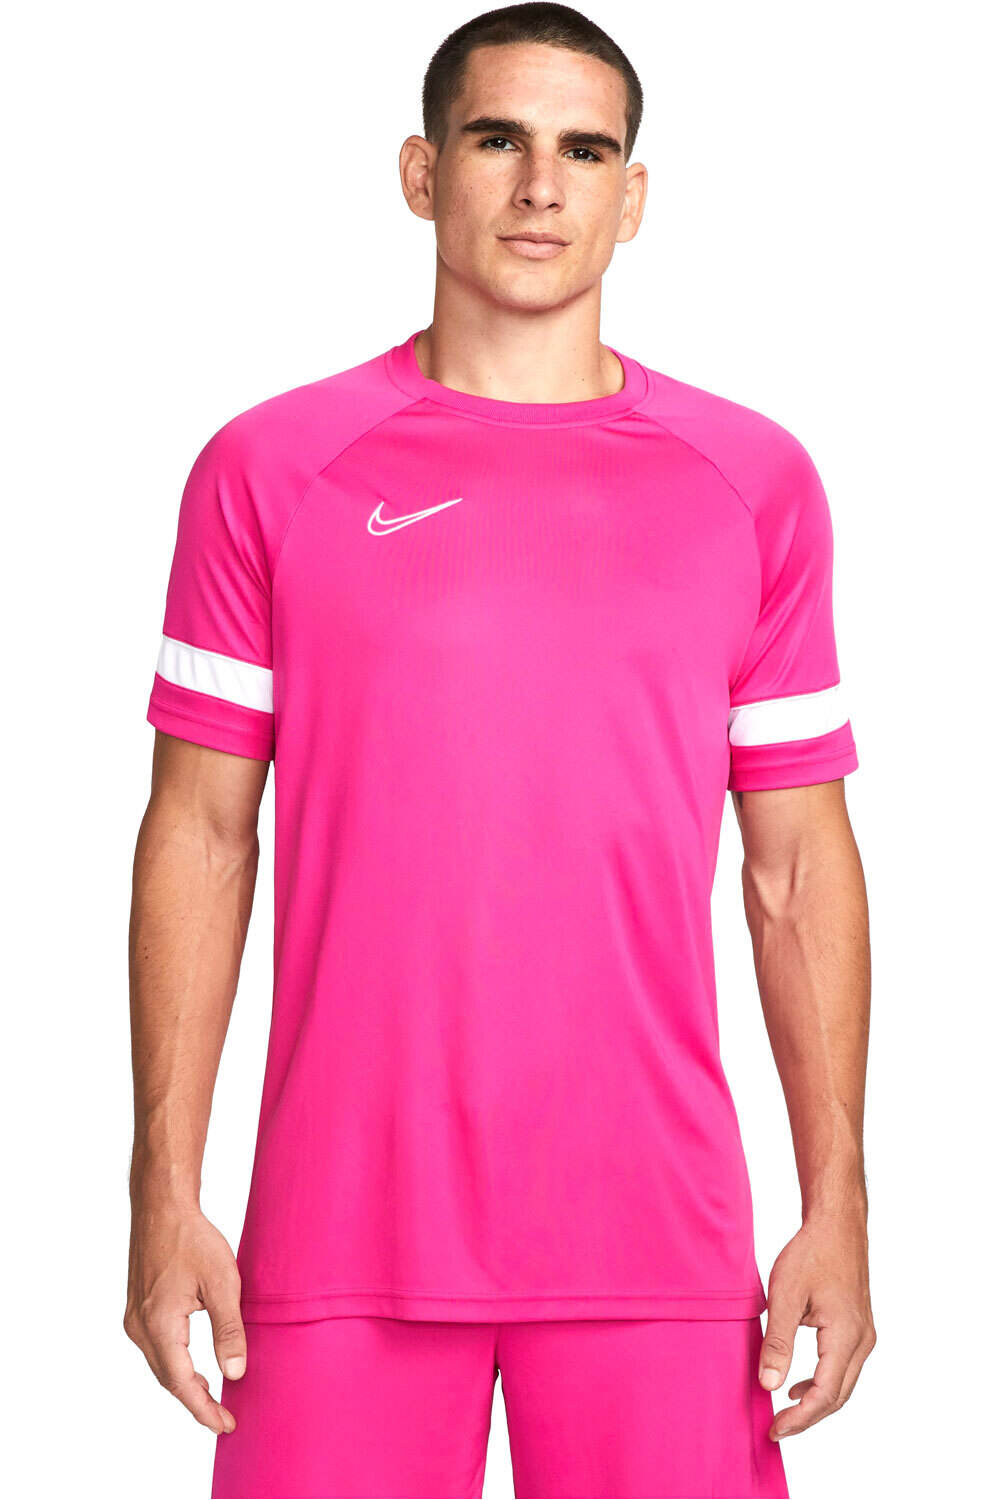 Nike camisetas fútbol manga corta CAMISETA DE MANGA CORTA DRI-FIT ACADEMY vista frontal